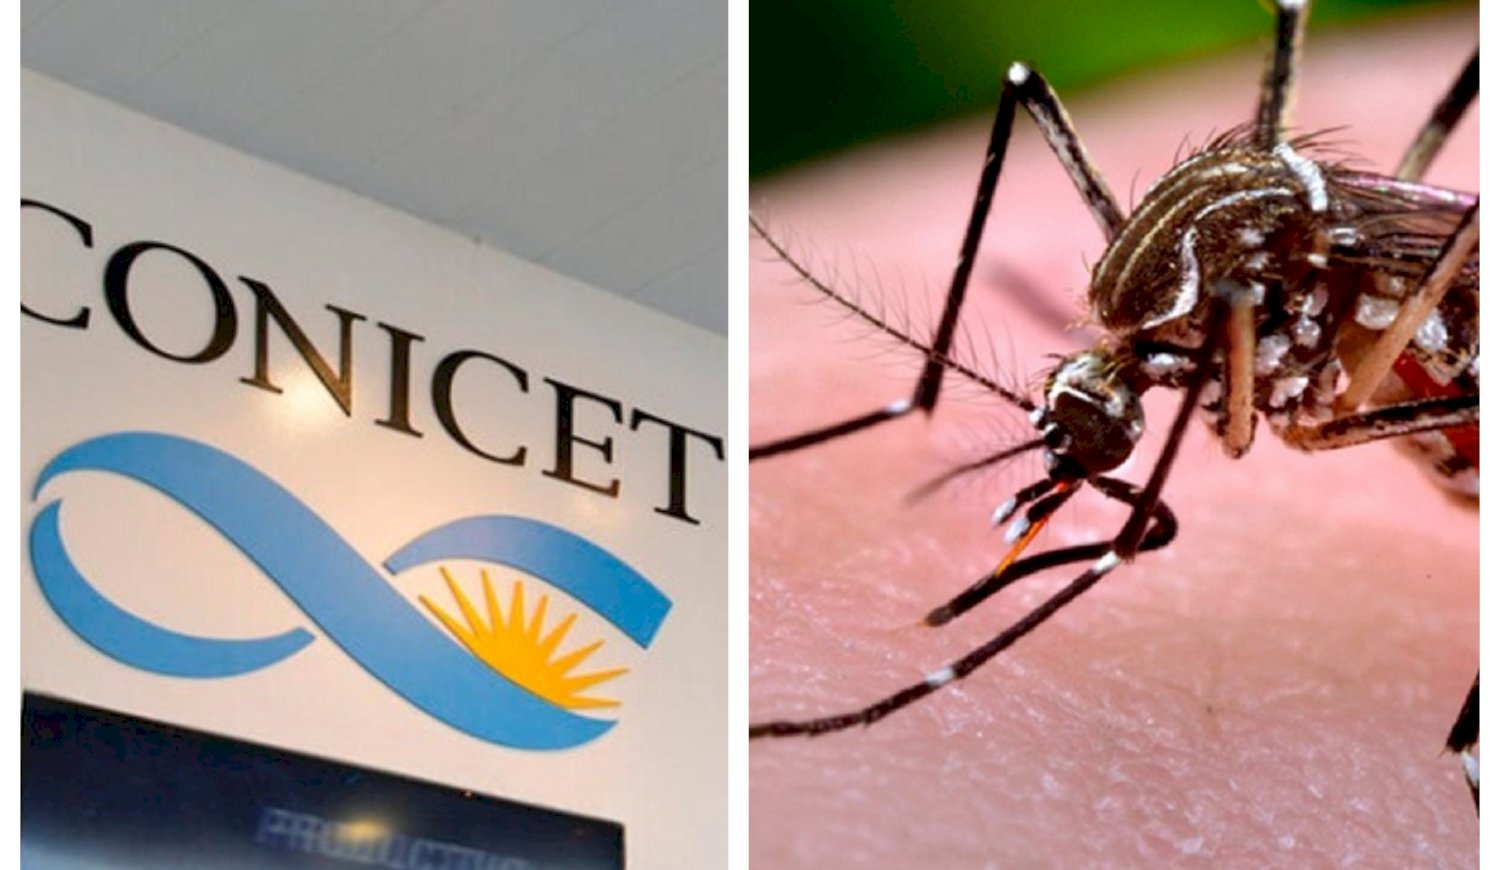 CONICET : Impactante descubrimiento del mosquito que transmite dengue